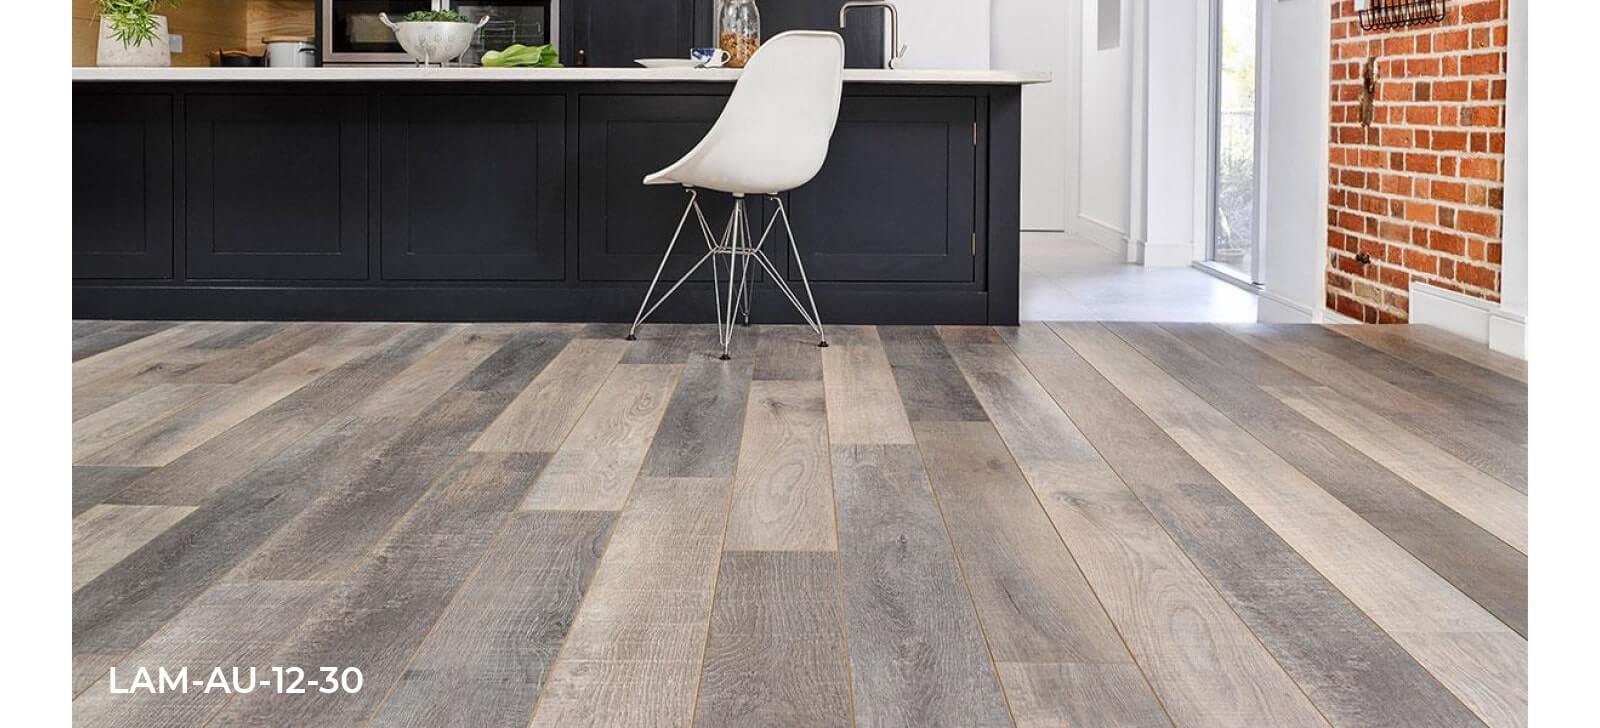 Audacity Woodland Oak laminate flooring Kitchen roomset